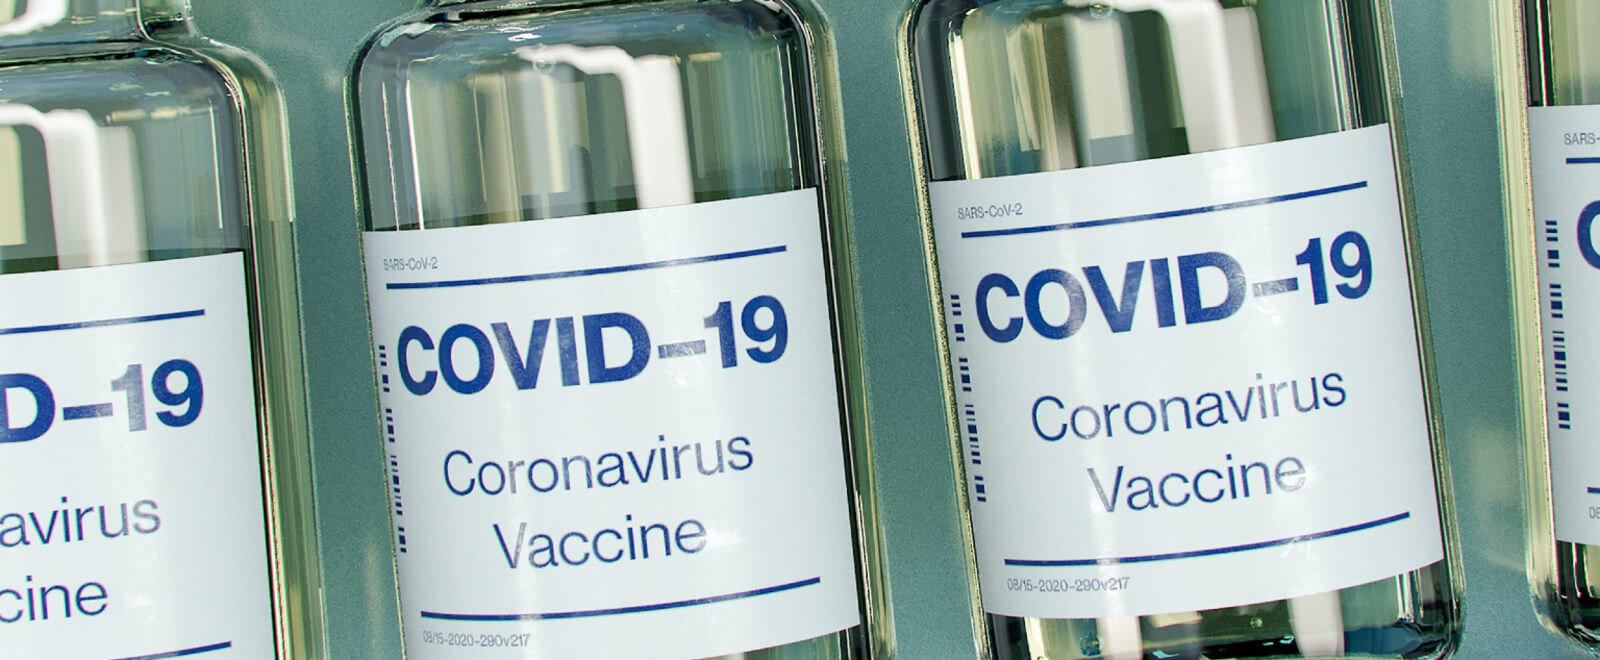 COVID labelled bottles